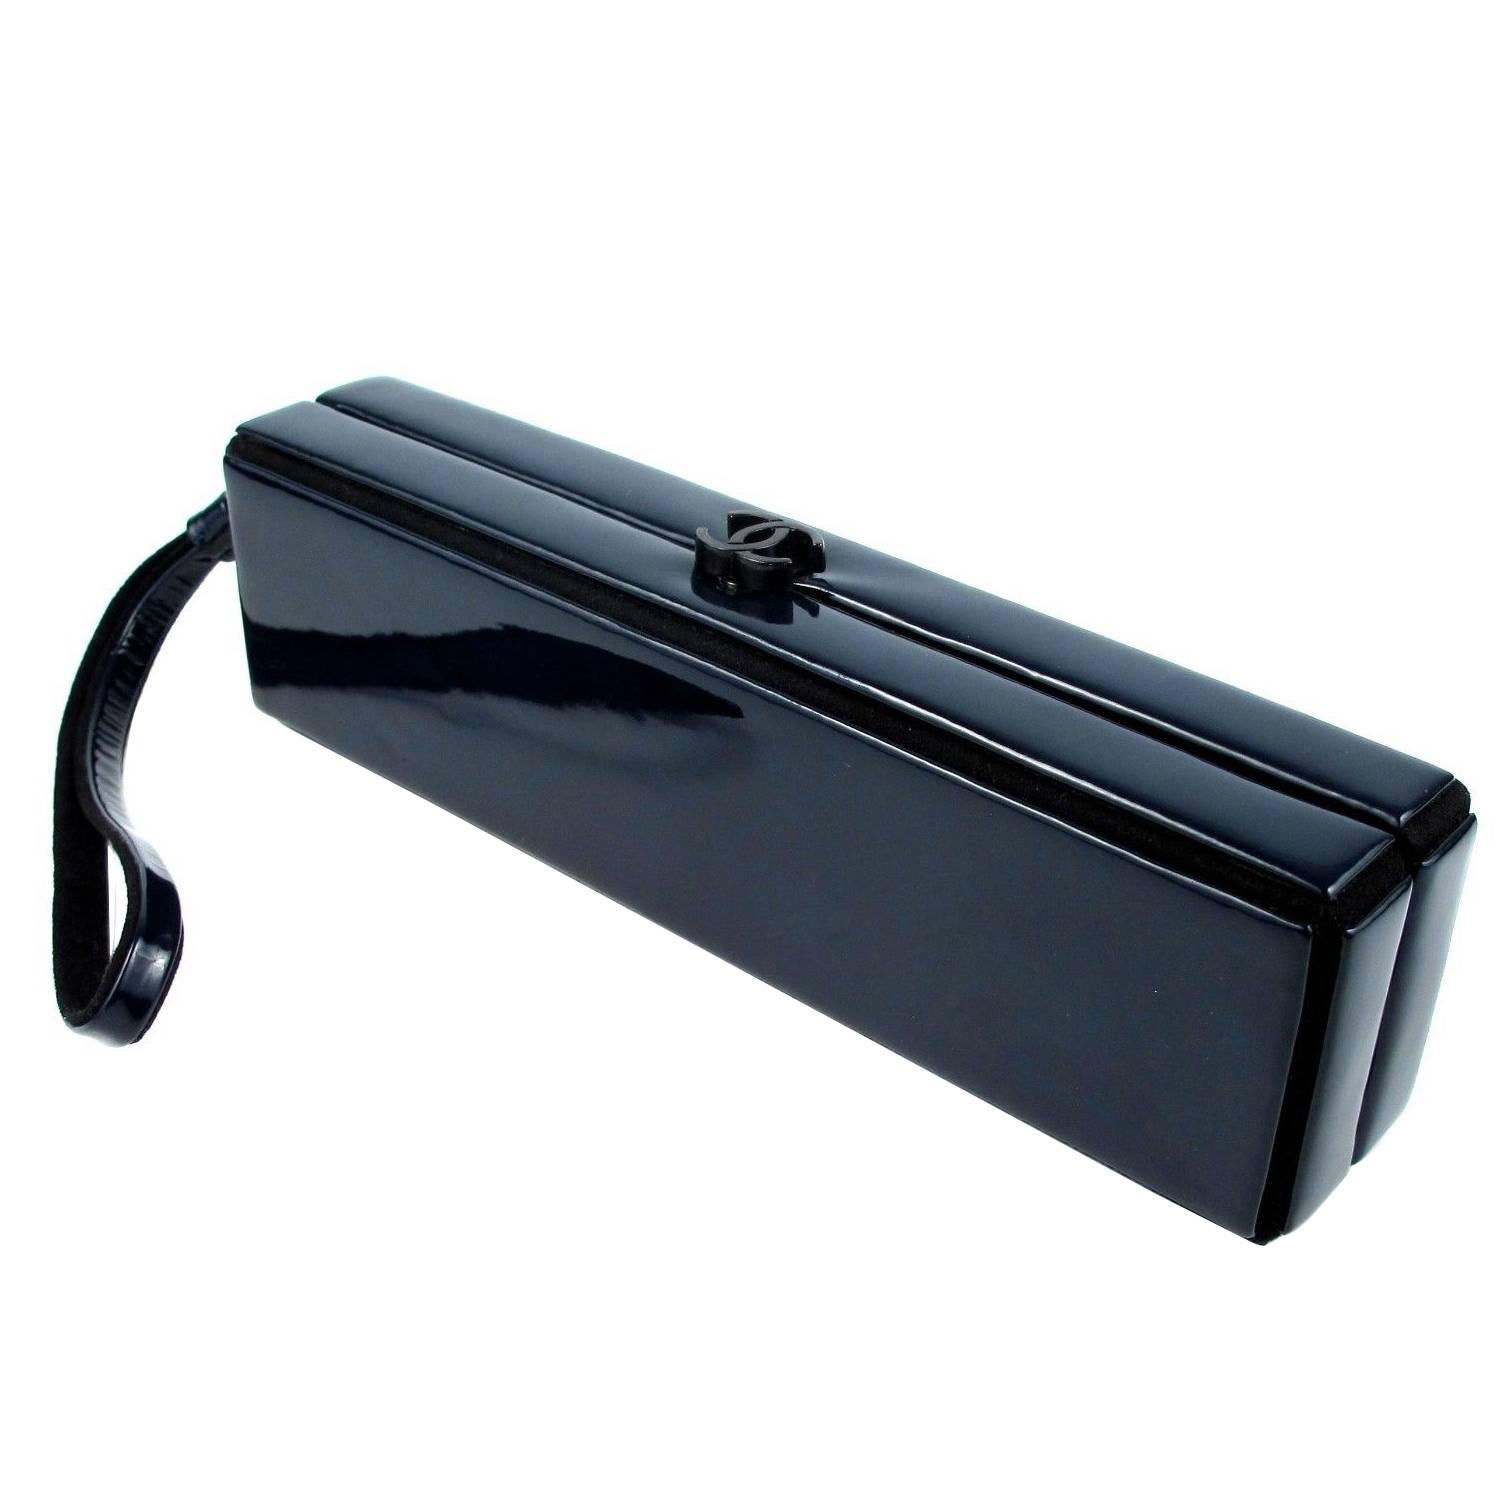 Chanel Clutch Box - Wristlet Blue & Black Leather CC Minaudie Bag Handbag Case